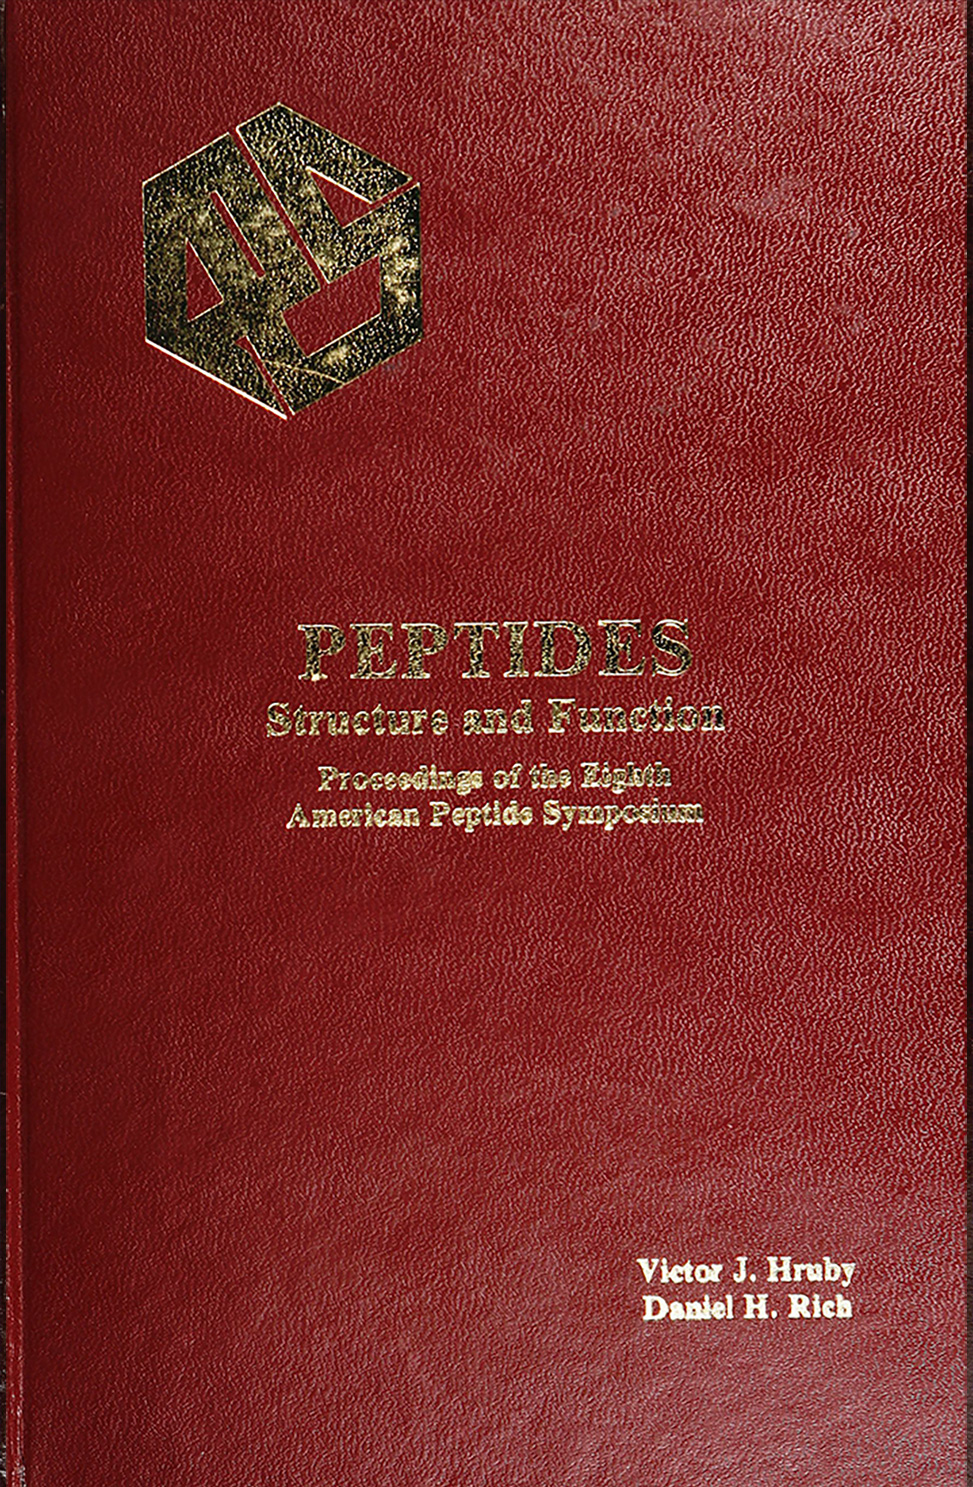 1983 Proceedings Cover